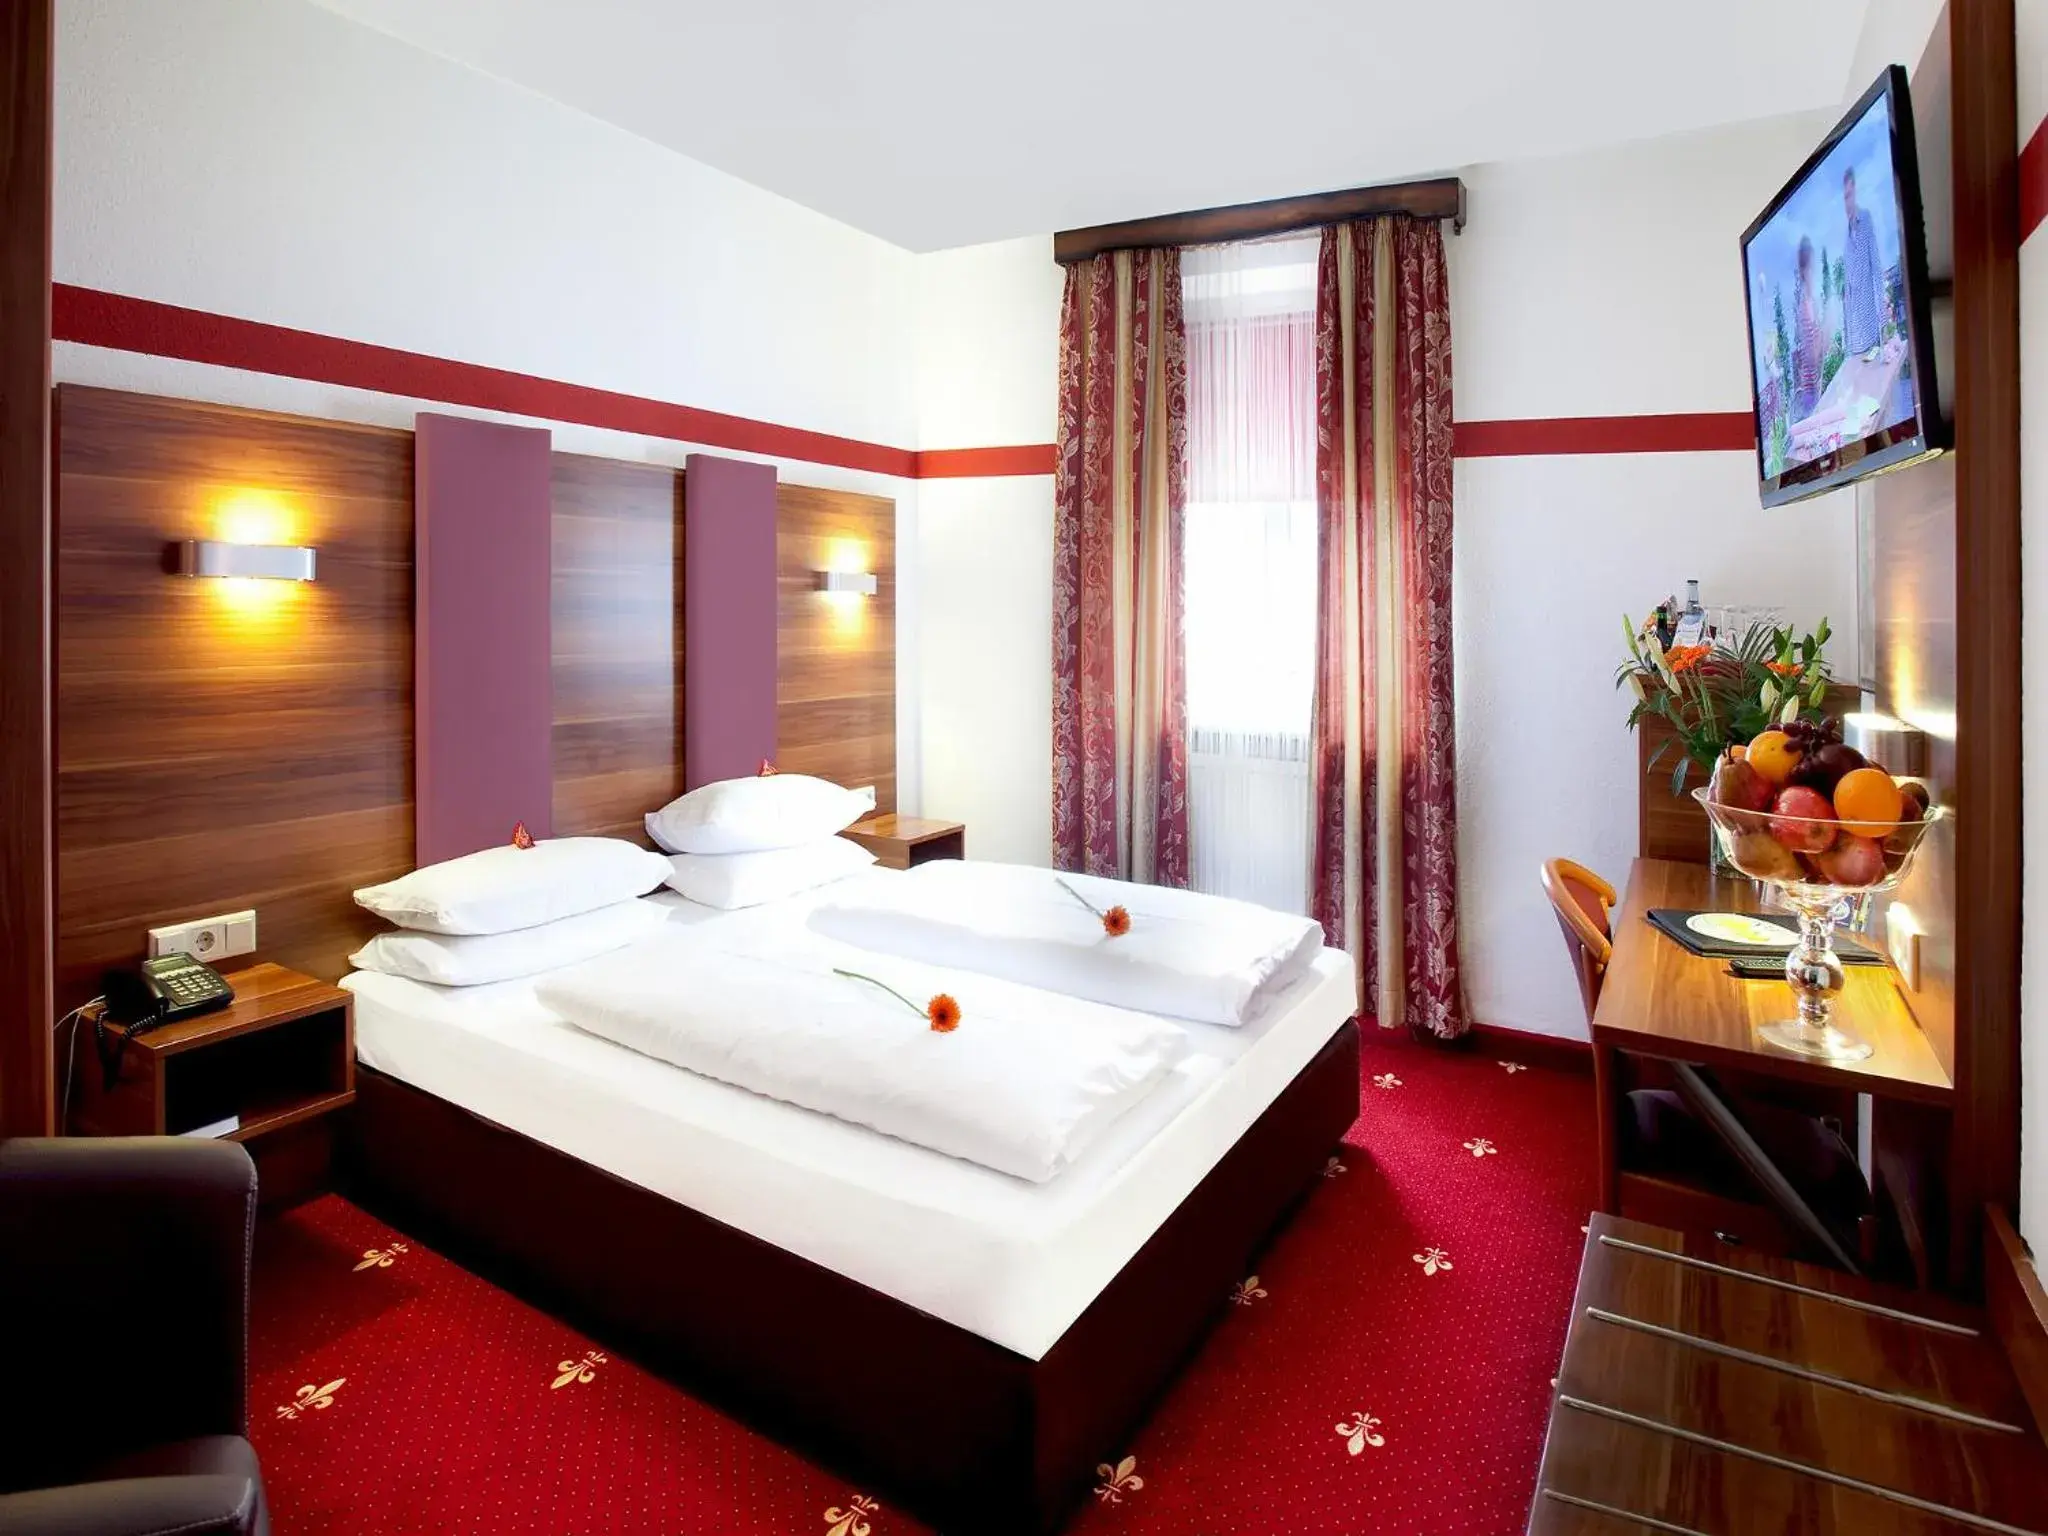 Photo of the whole room, Bed in Tiptop Hotel Burgschmiet Garni